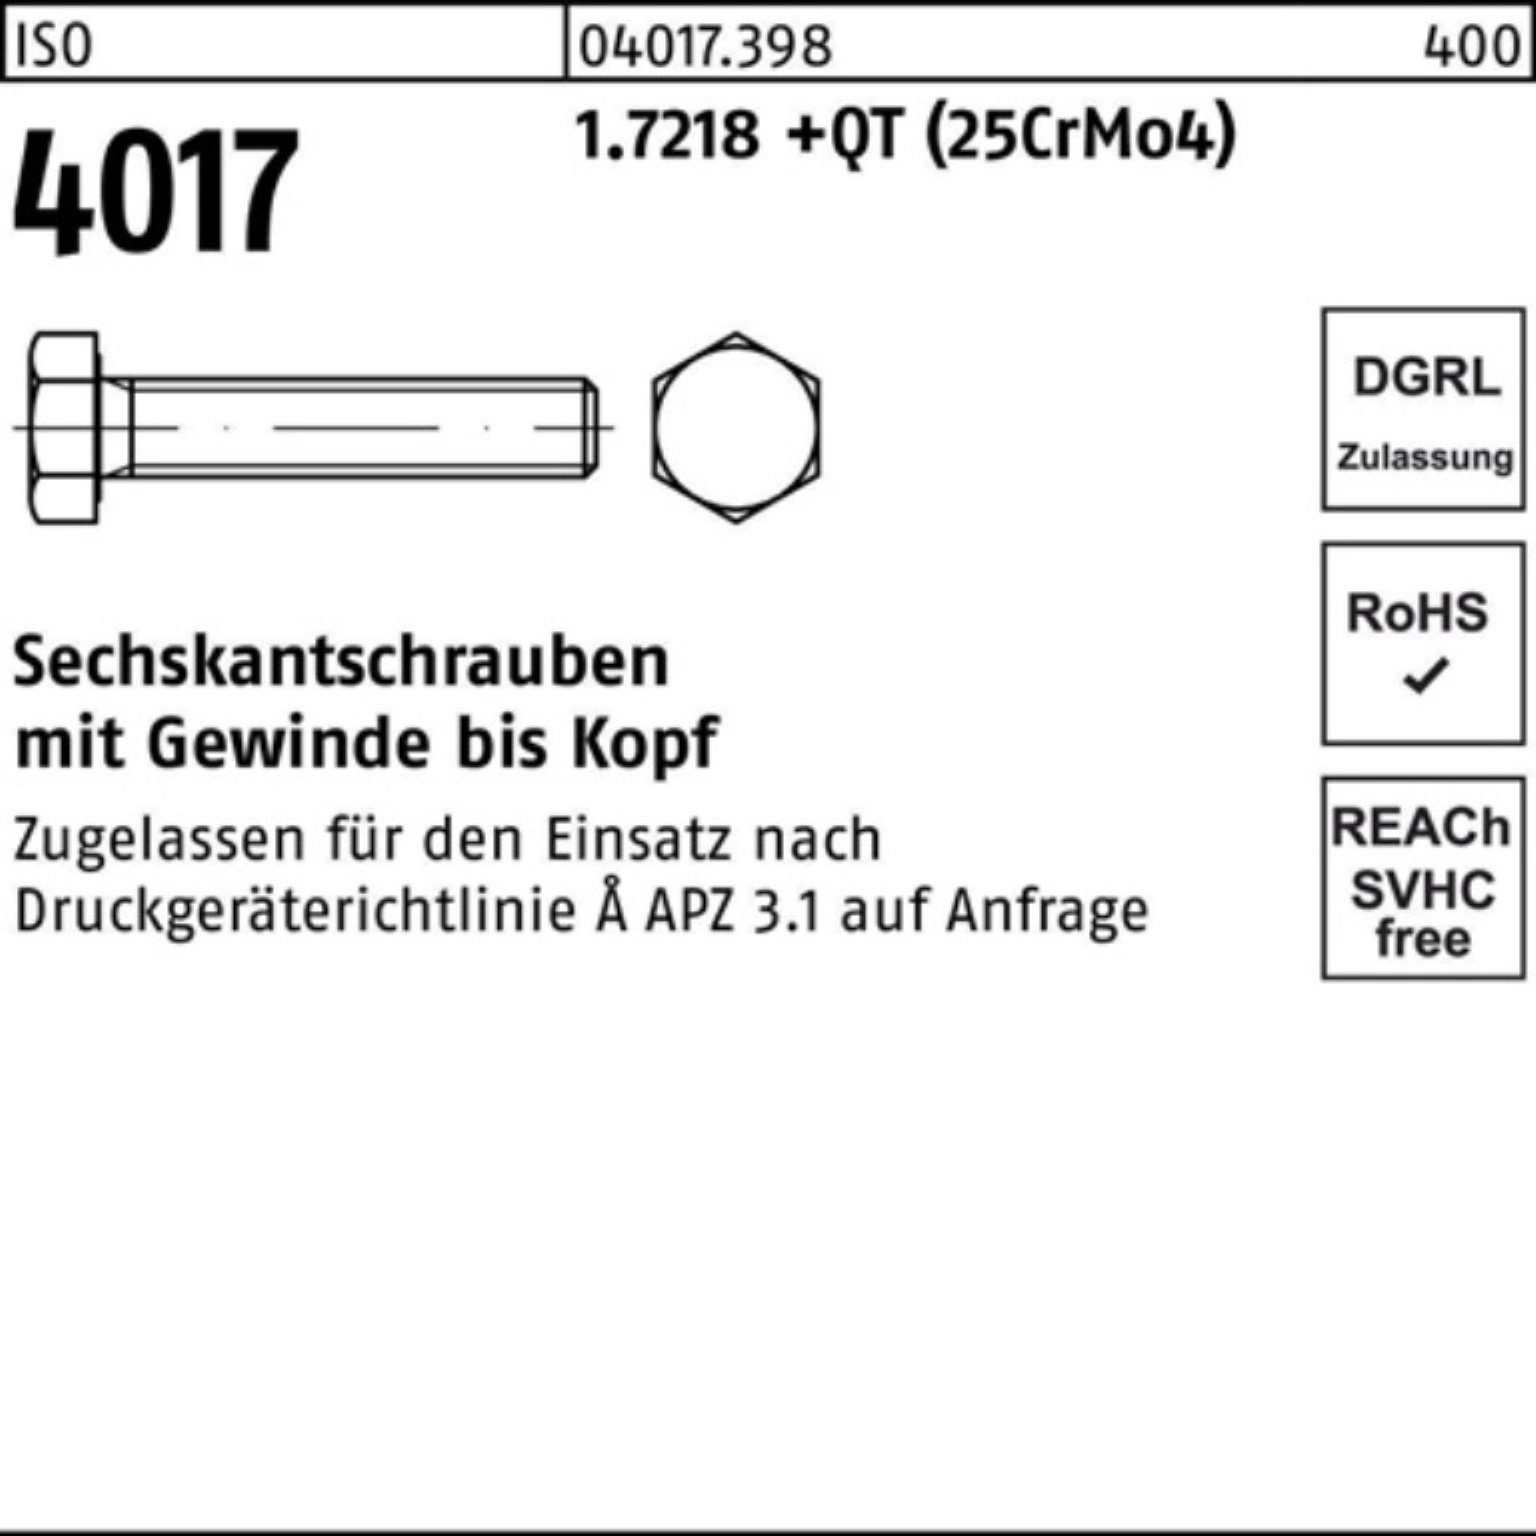 4017 1.7218 Bufab (25CrMo4) VG ISO Sechskantschraube +QT Pack M12x 100er Sechskantschraube 20